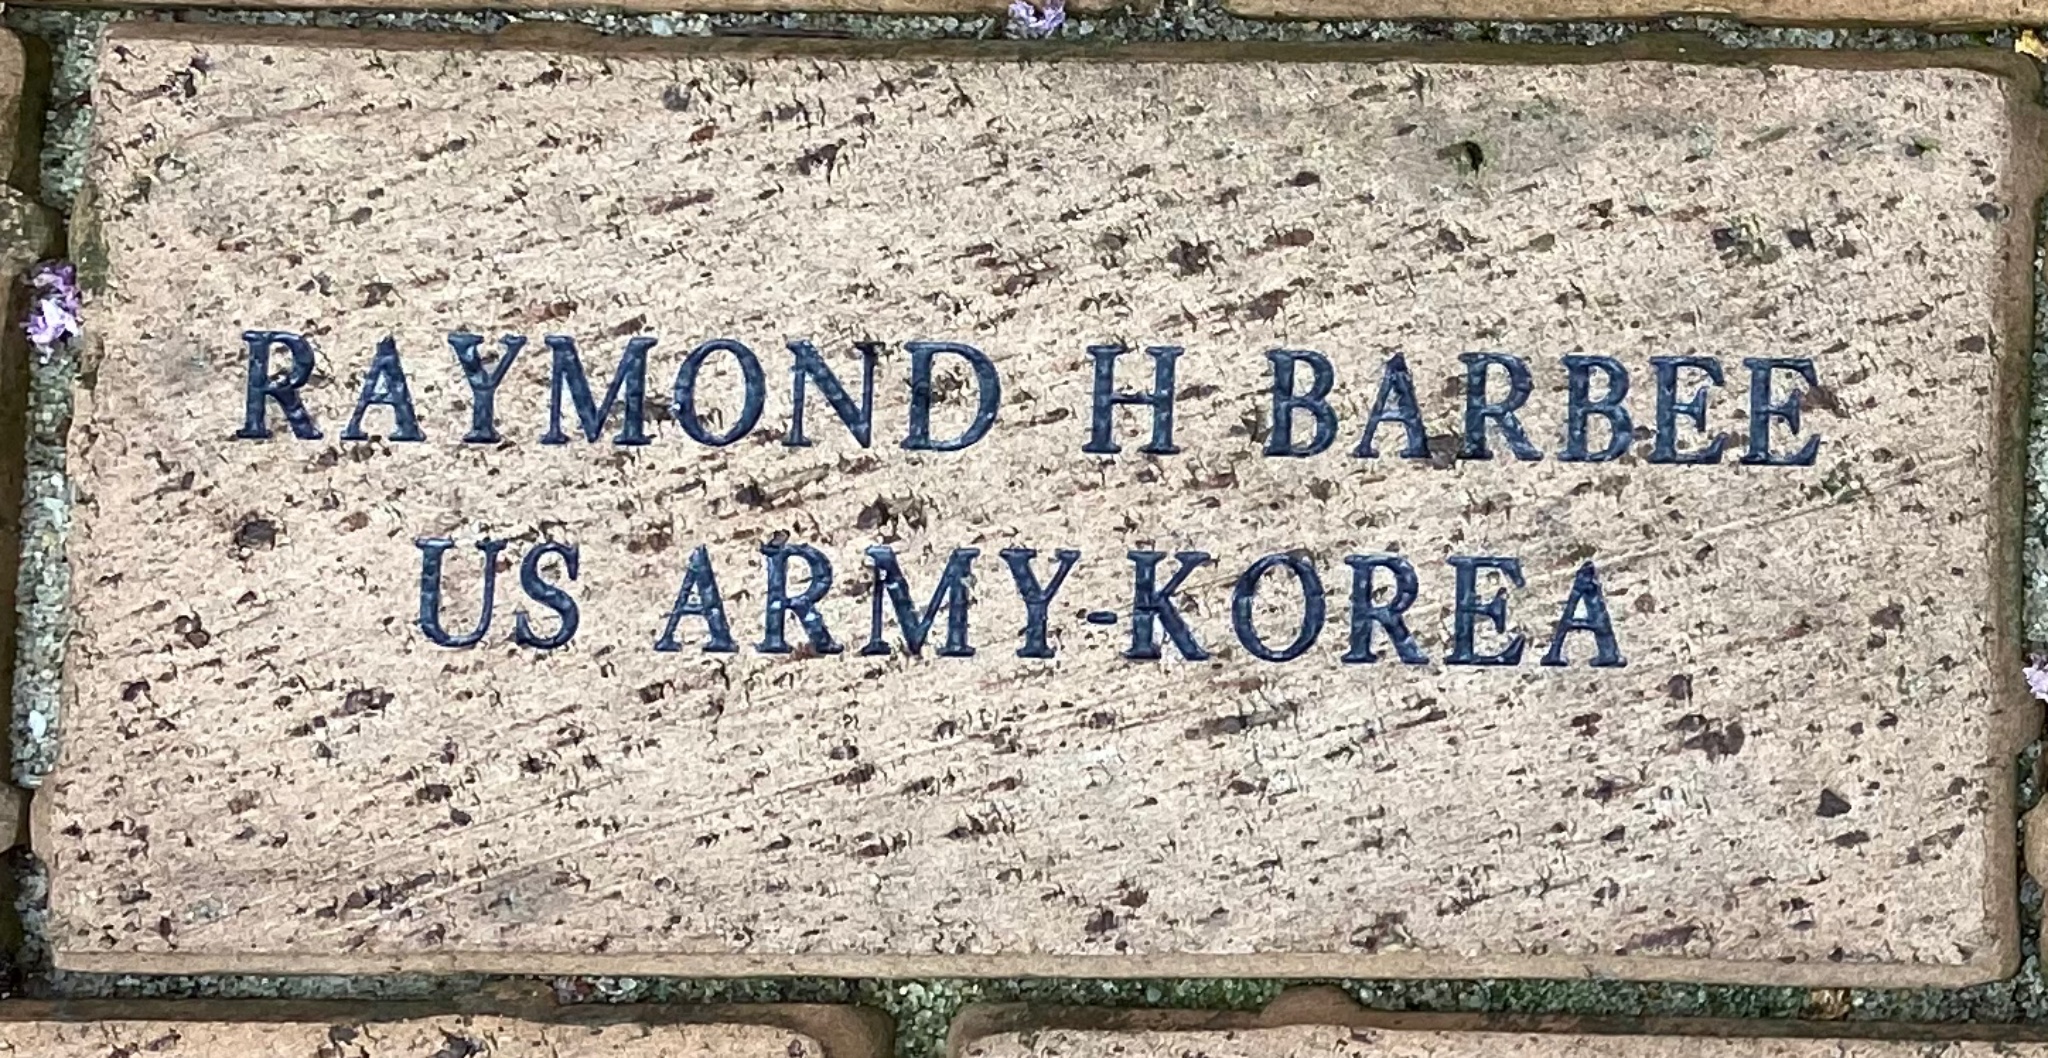 RAYMOND H. BARBEE U S ARMY KOREA